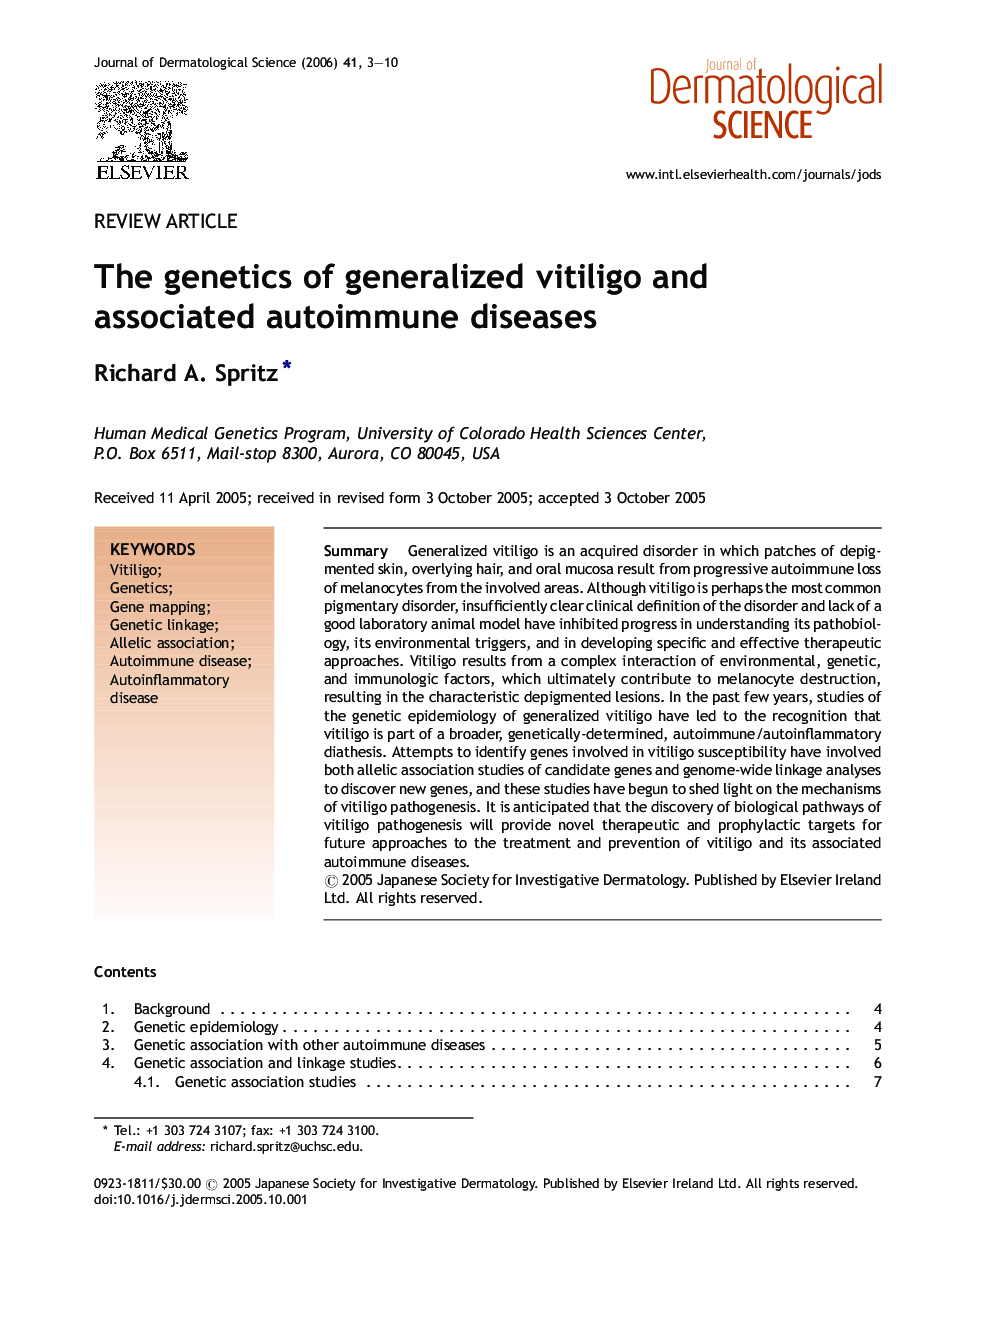 The genetics of generalized vitiligo and associated autoimmune diseases